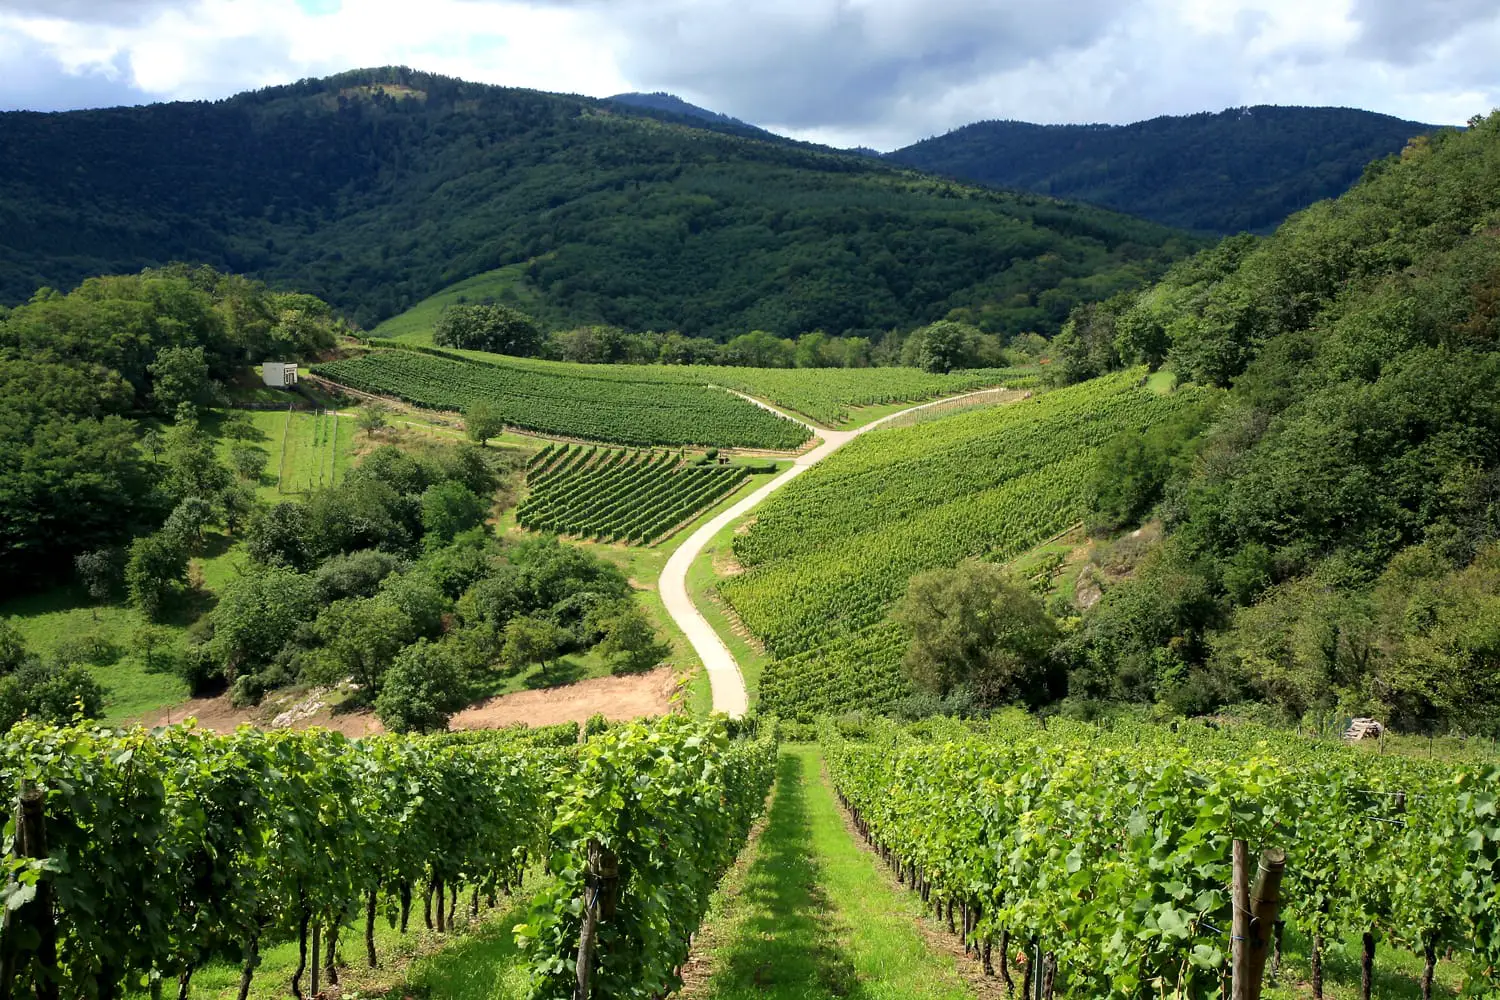 Route des vines in Alsace France